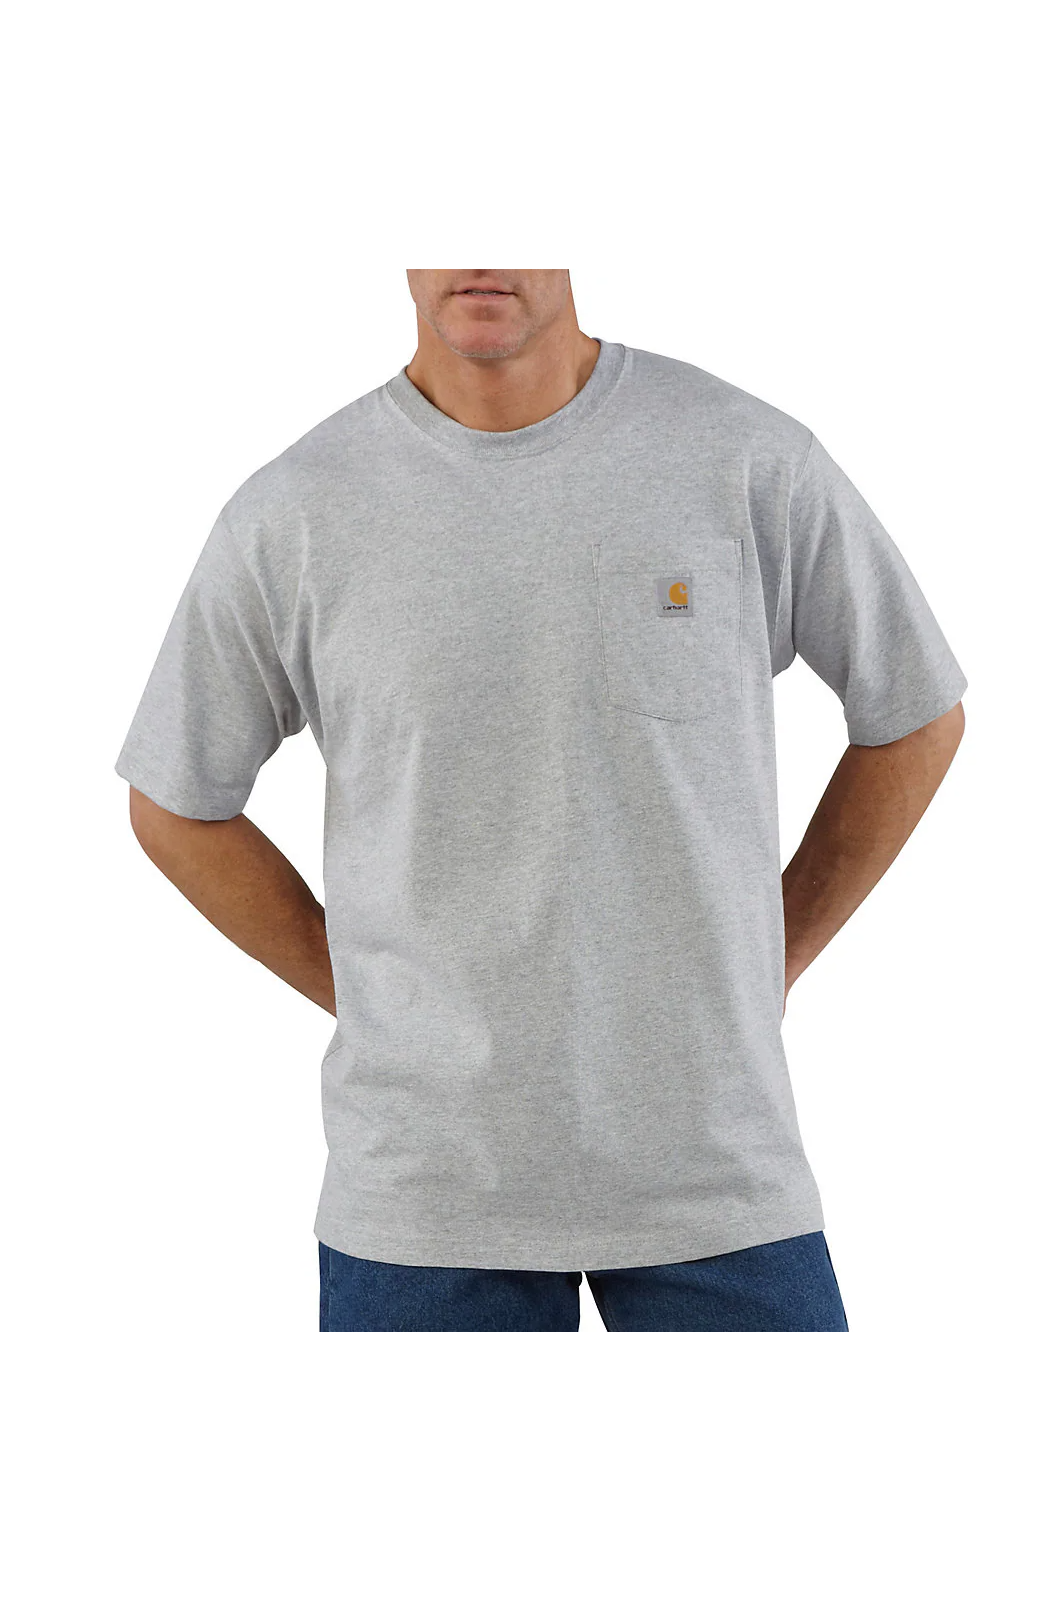 Carhartt BIG/TALL loose fit heavyweight short sleeve pocket t-shirt